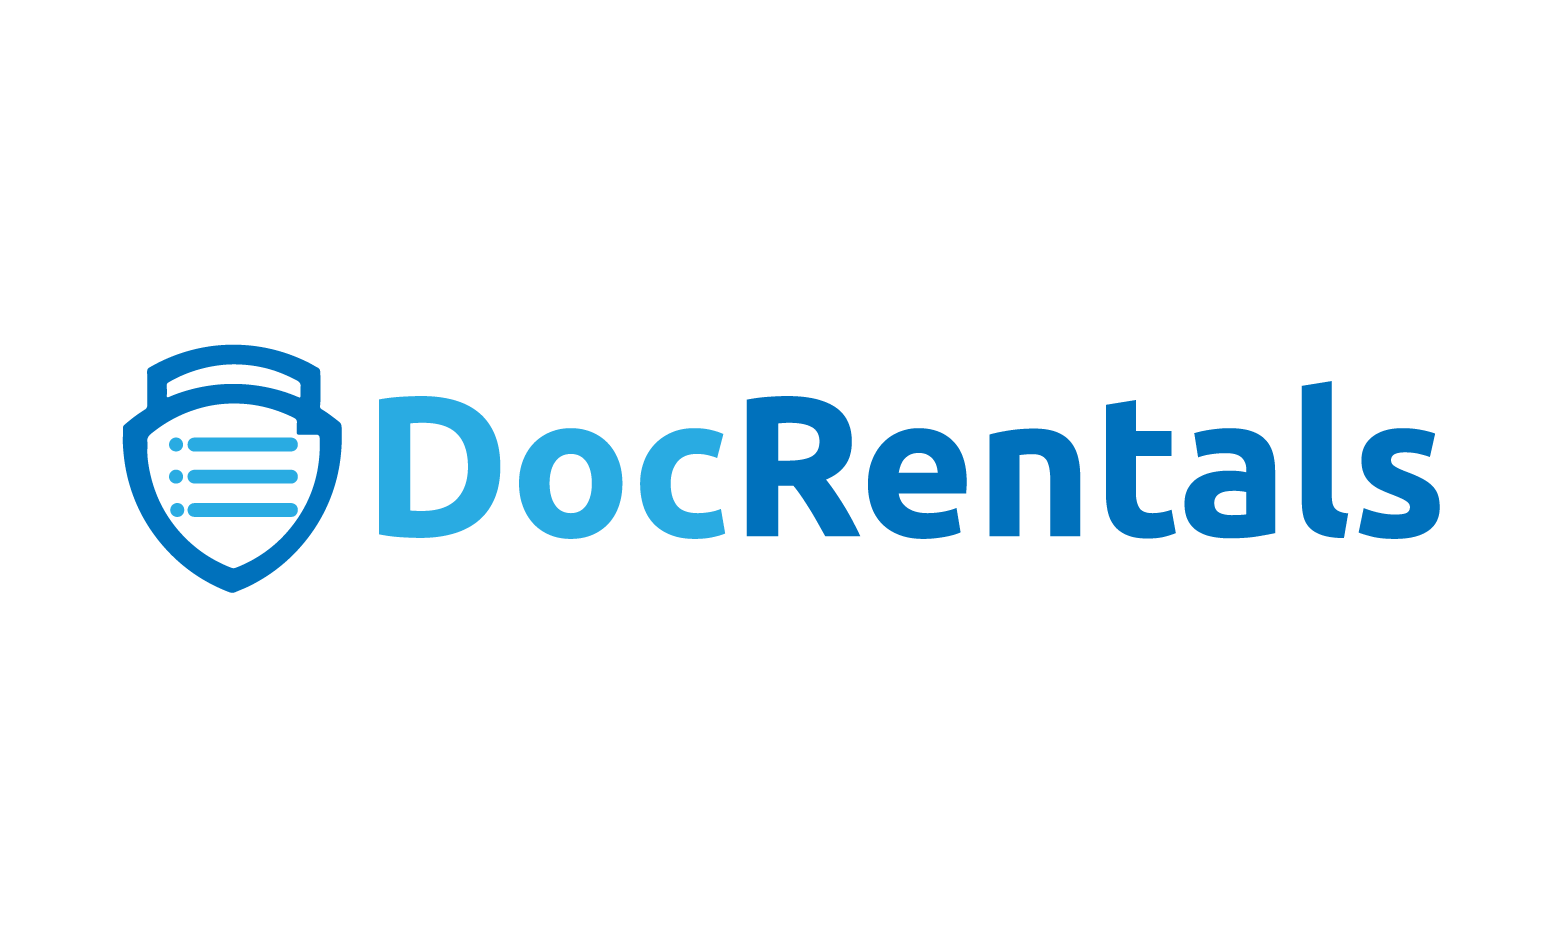 DocRentals.com - Creative brandable domain for sale